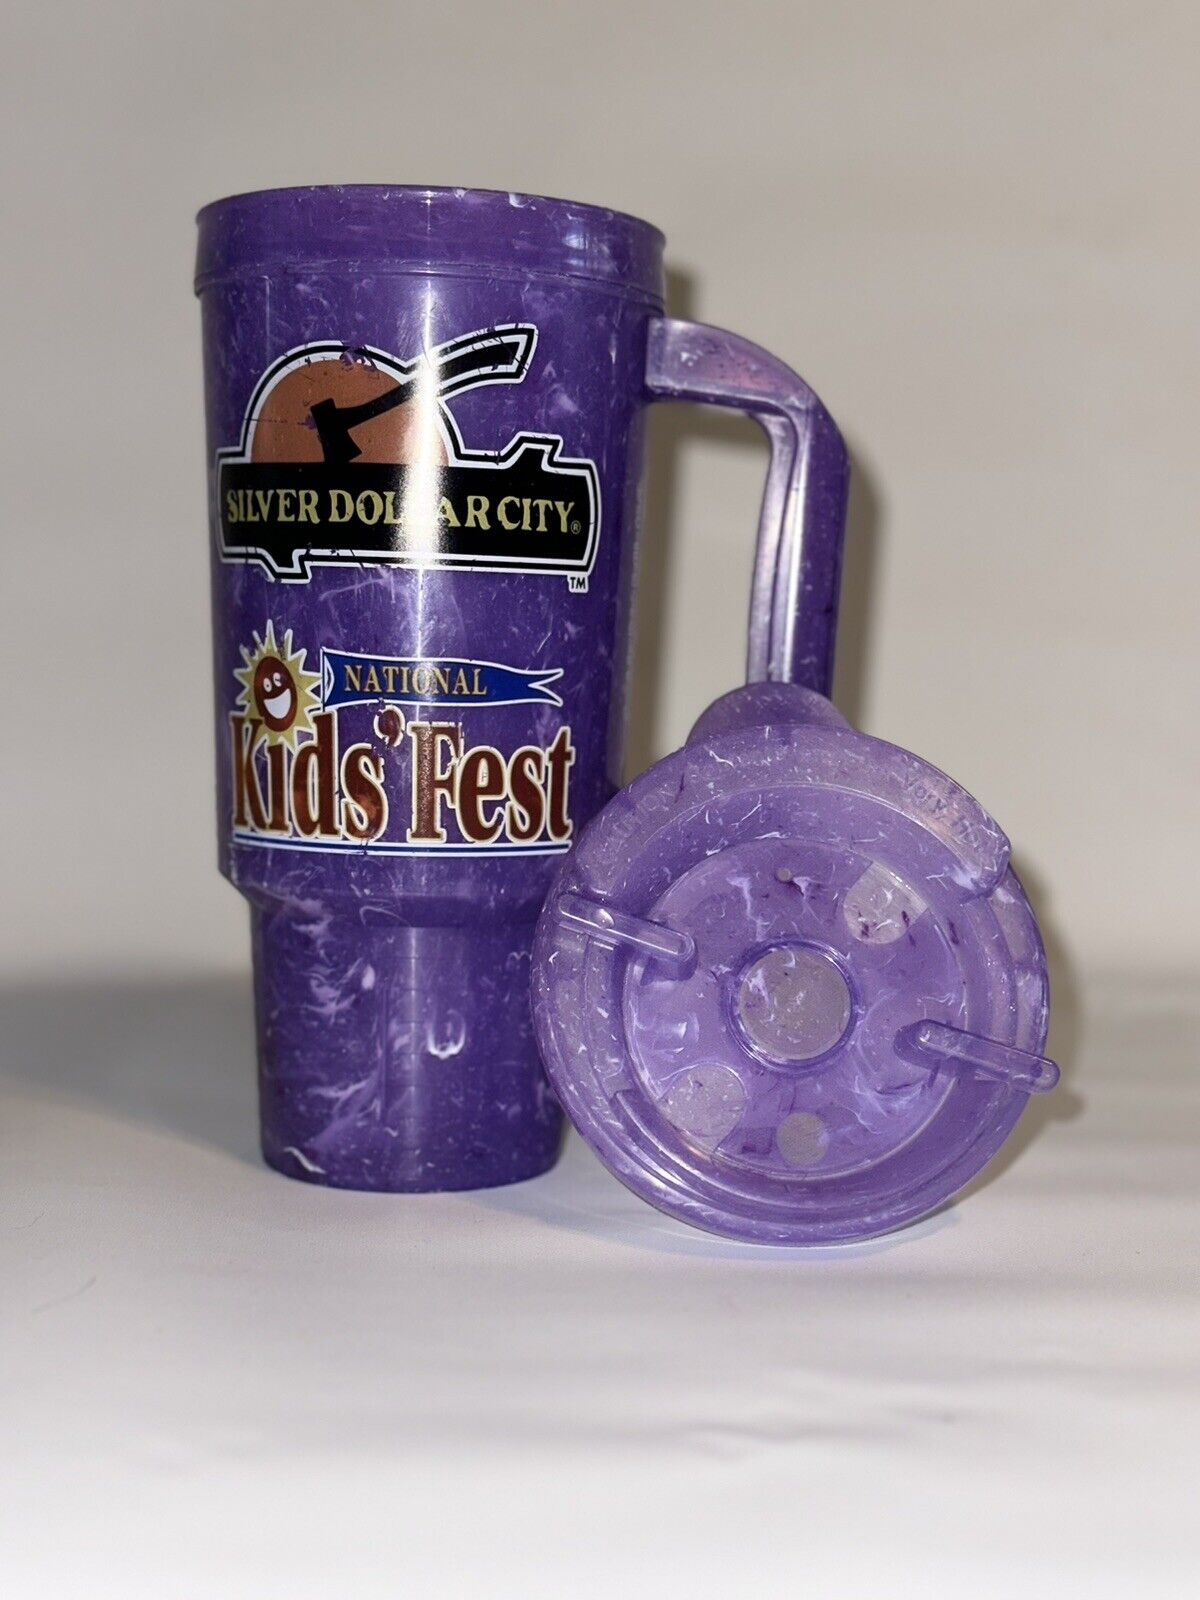 Silver Dollar City Refillable Mug Grandfathered 2003 Cup Mug Purple Kids Fest